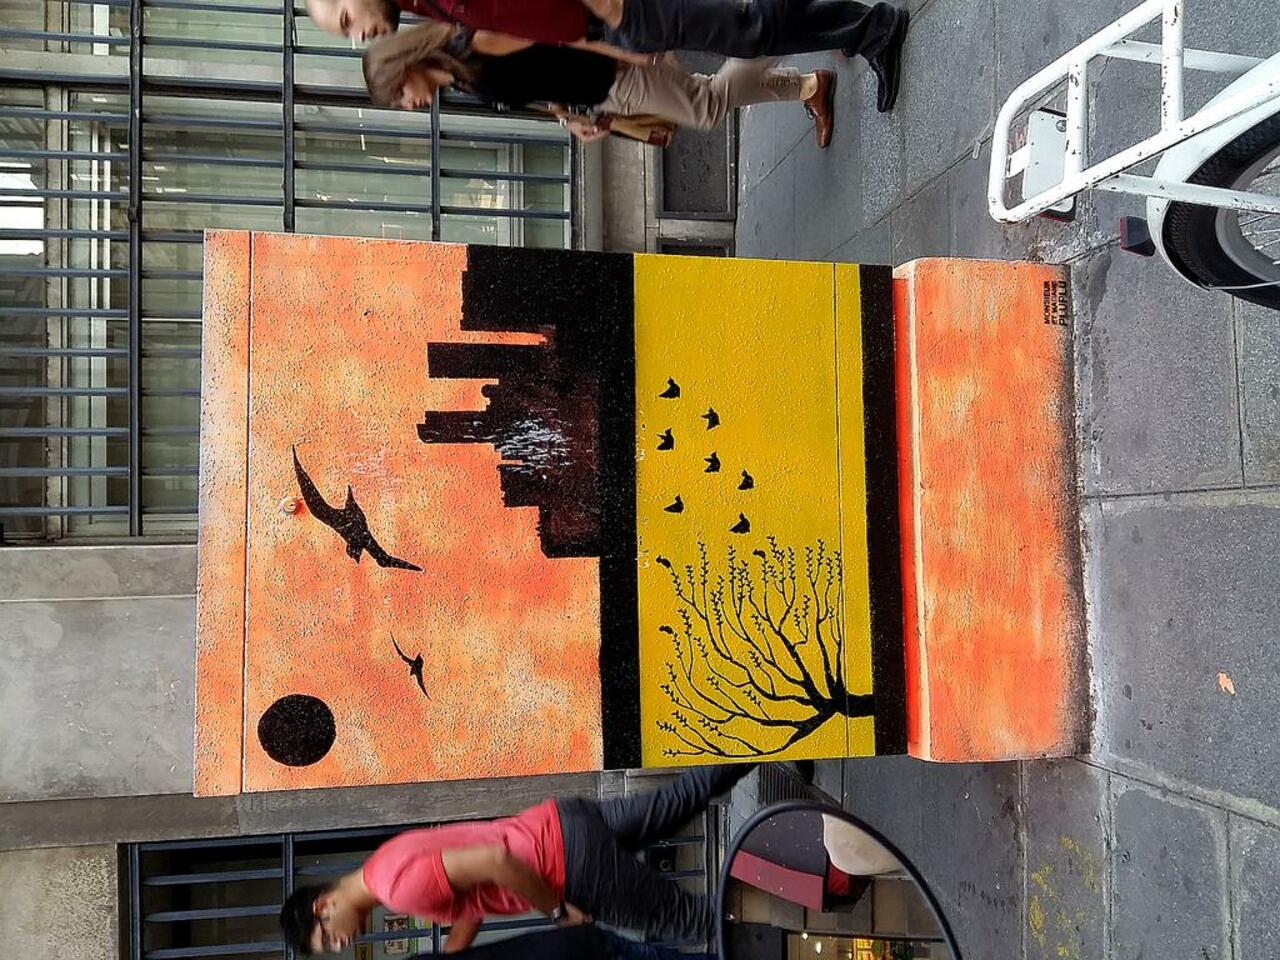 Street Art by Monsieur et Madame PLUPLU in #Paris http://www.urbacolors.com #art #mural #graffiti #streetart http://t.co/QXKKO9RjbC